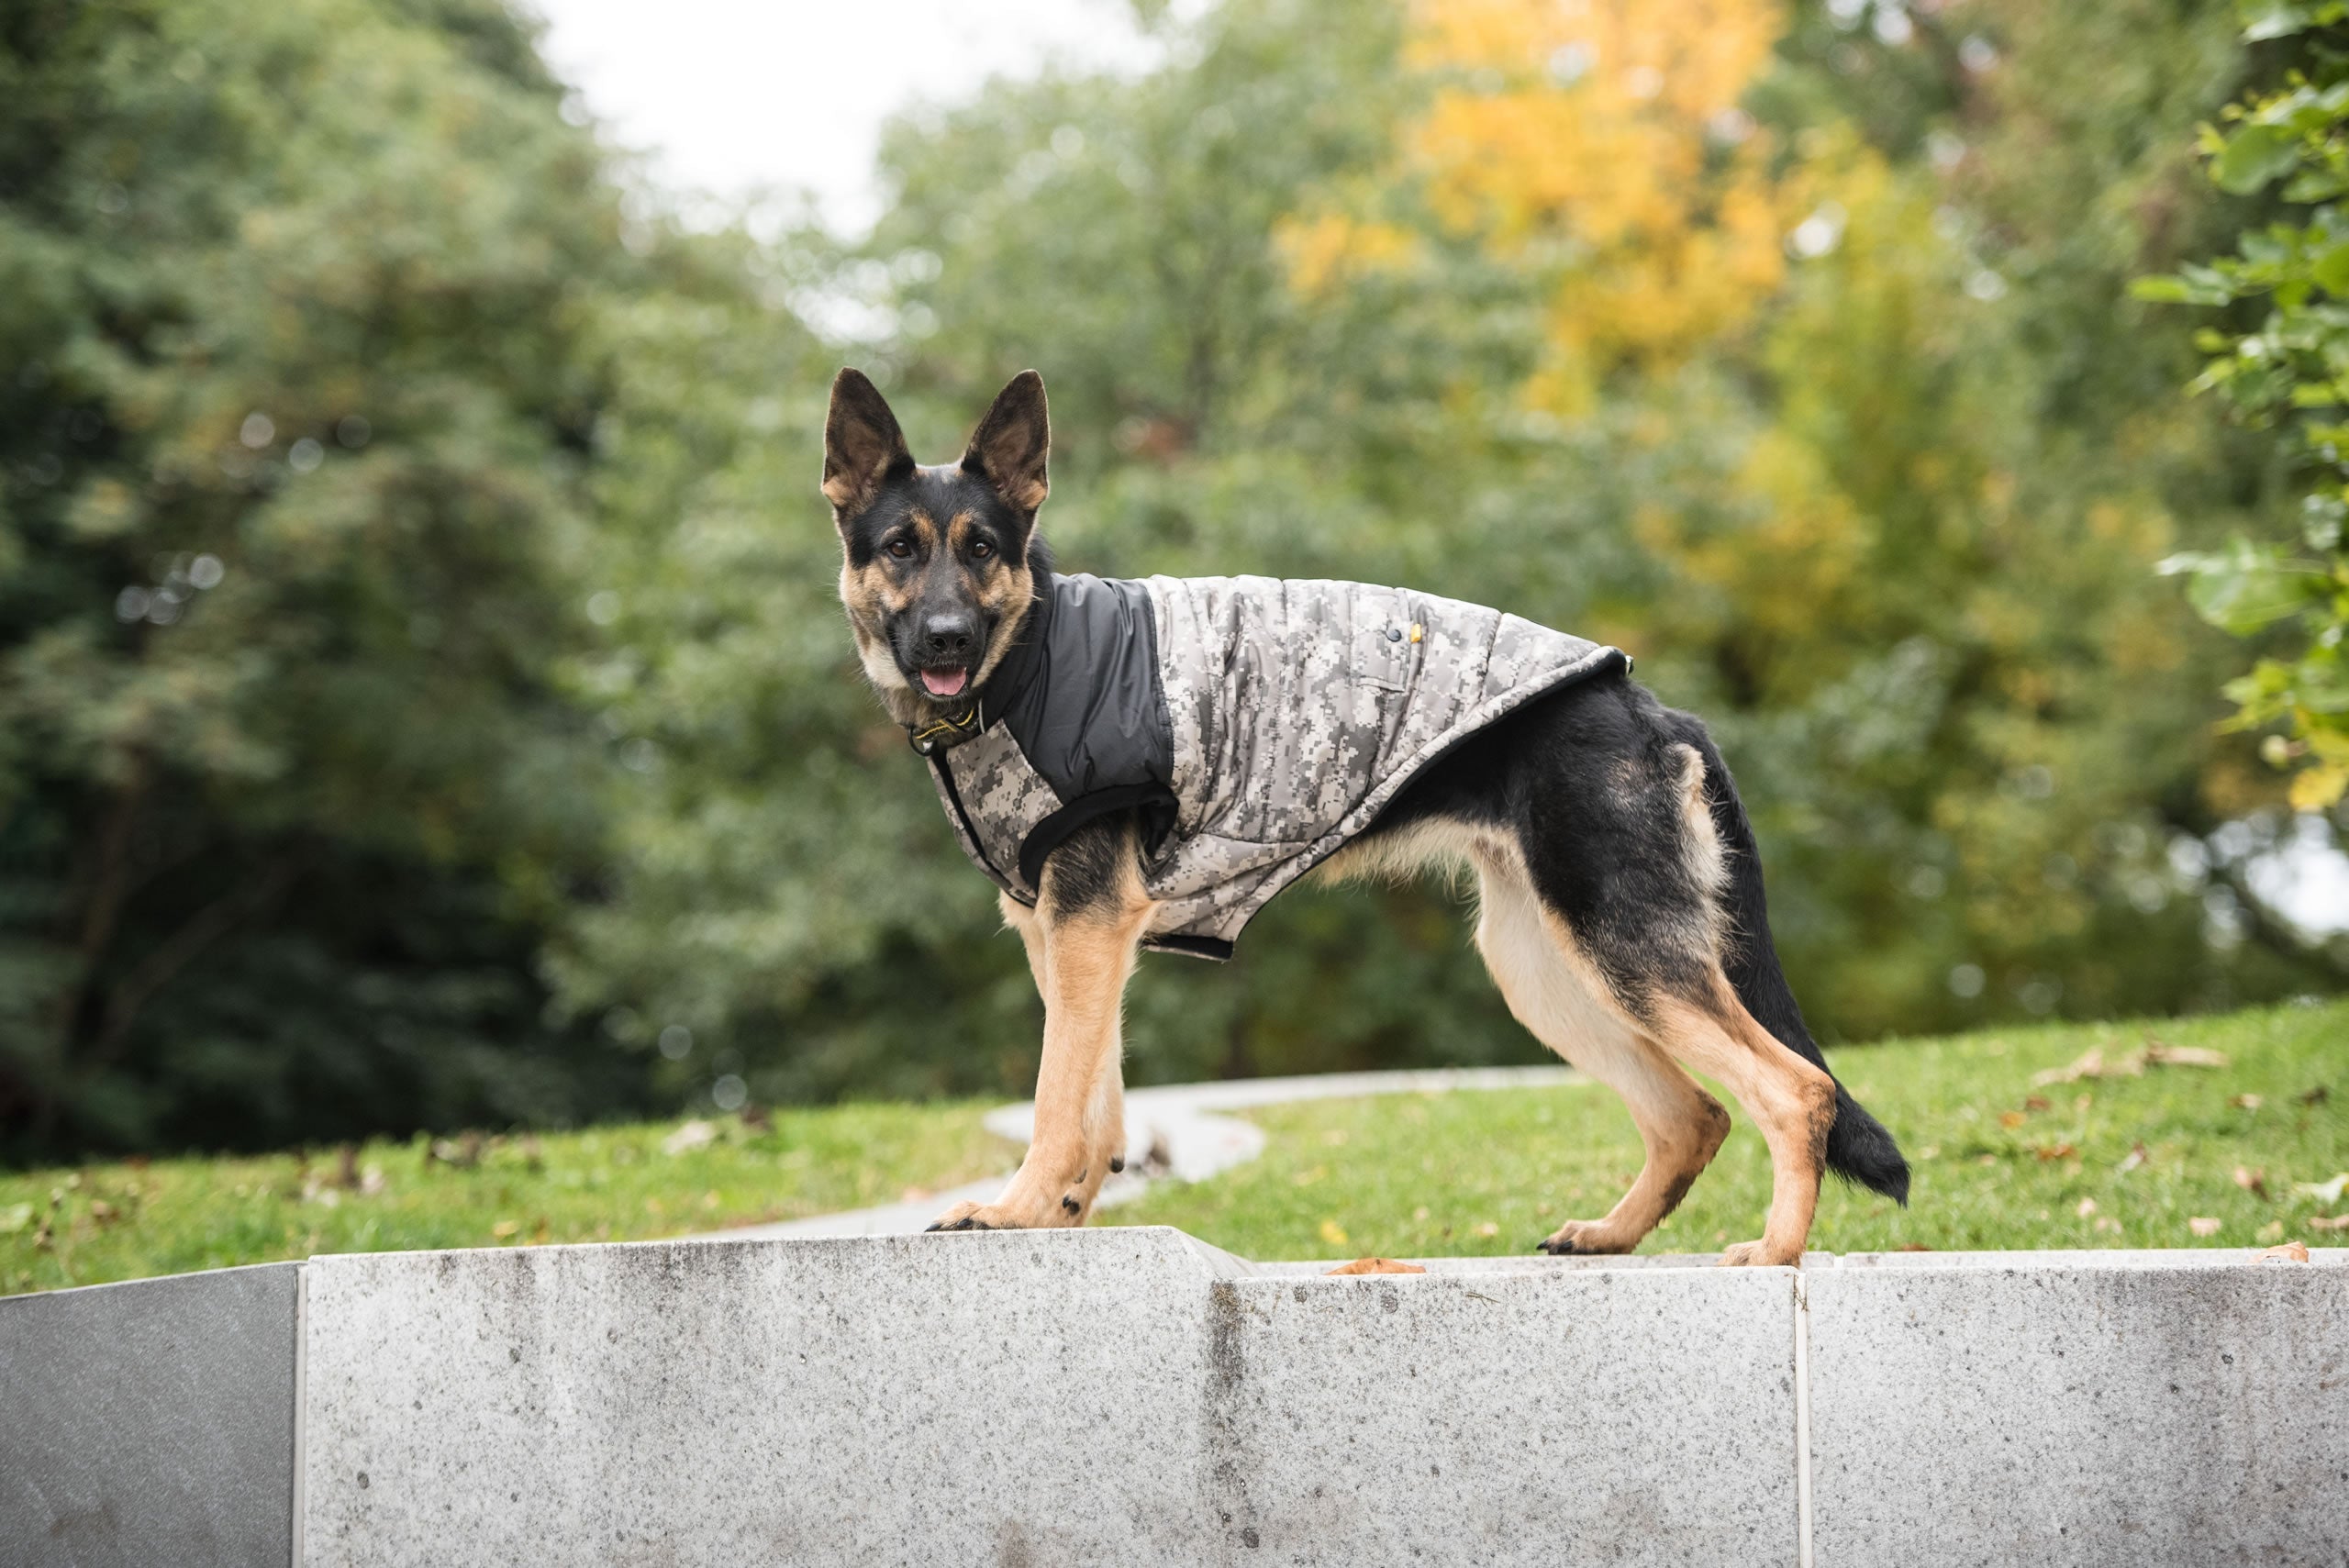 US Army Dog Jacket - Camo